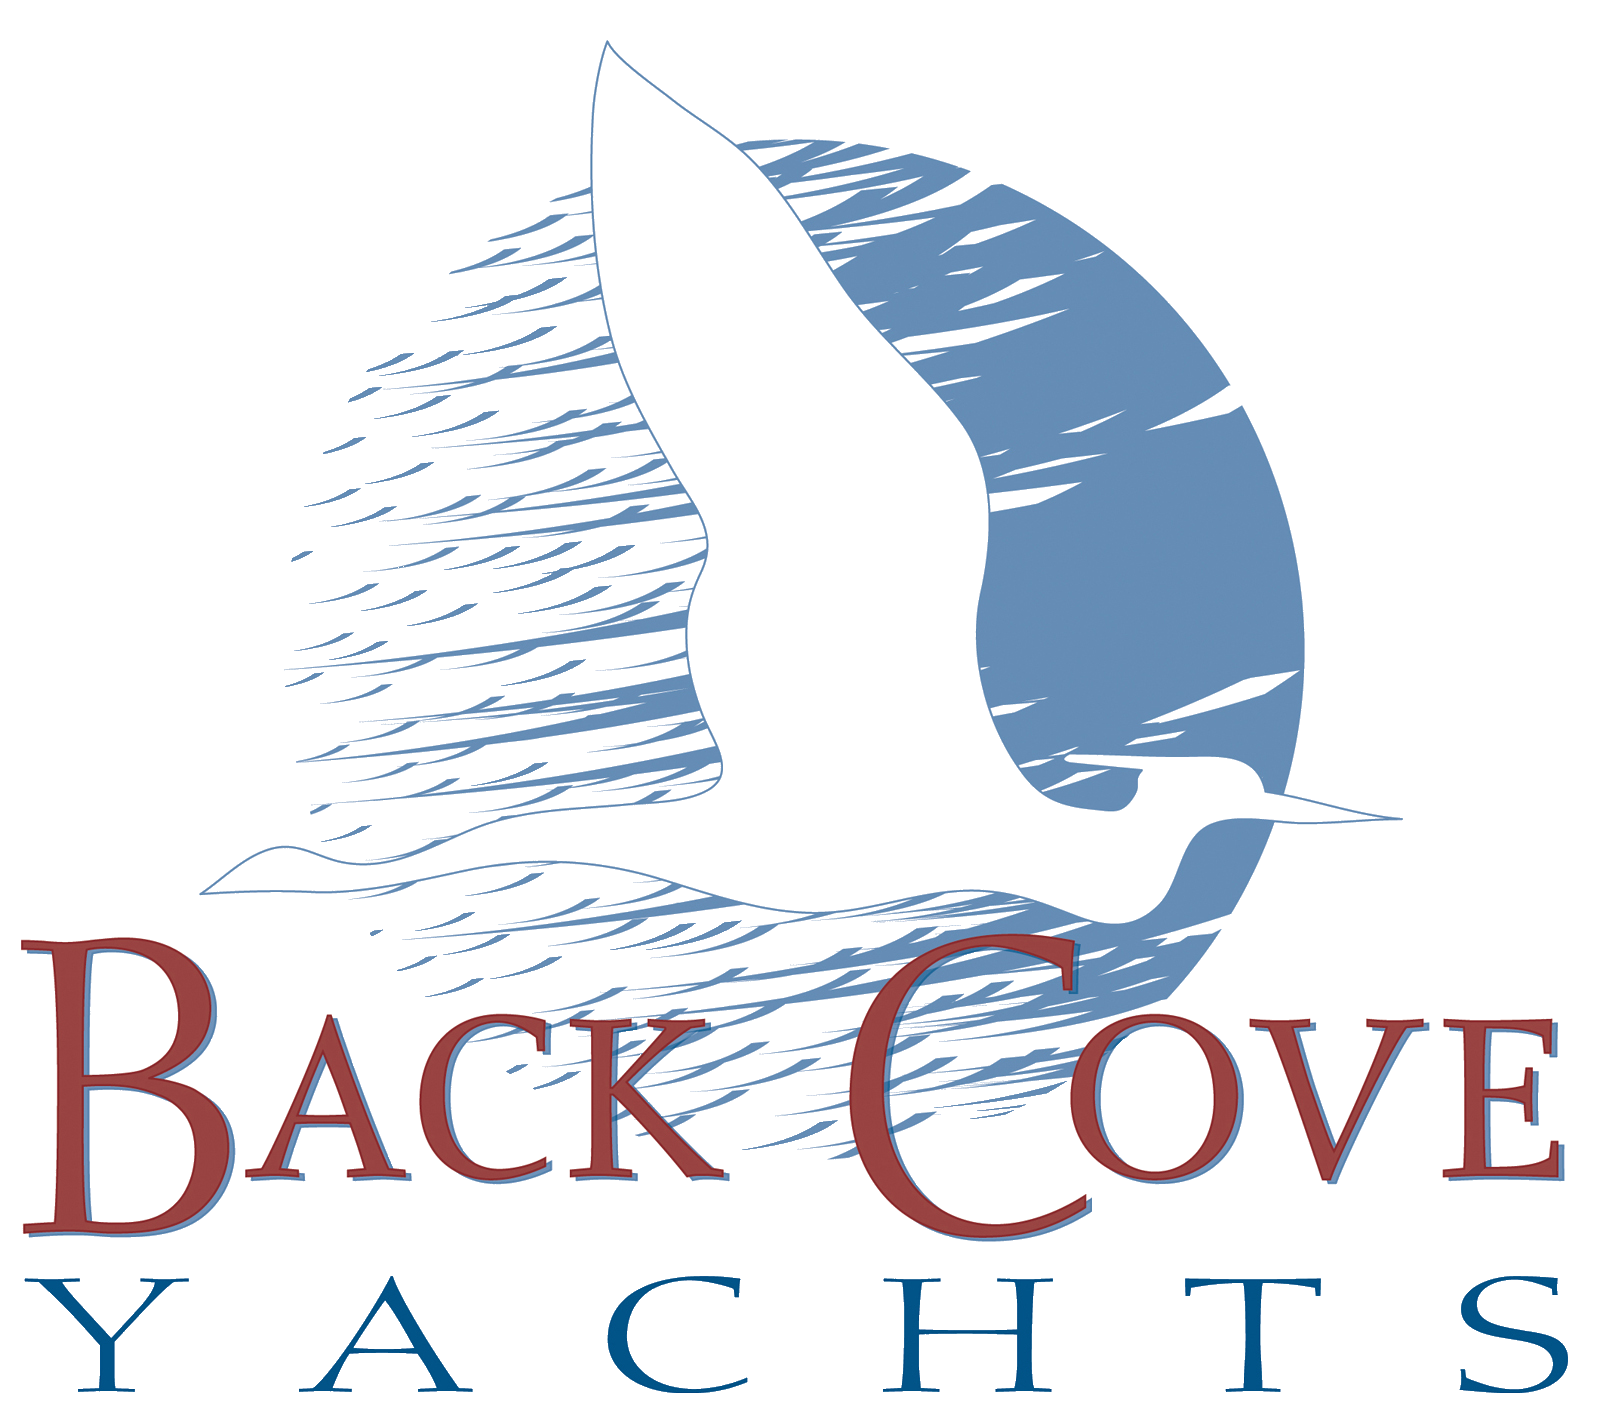 Back Cove logo